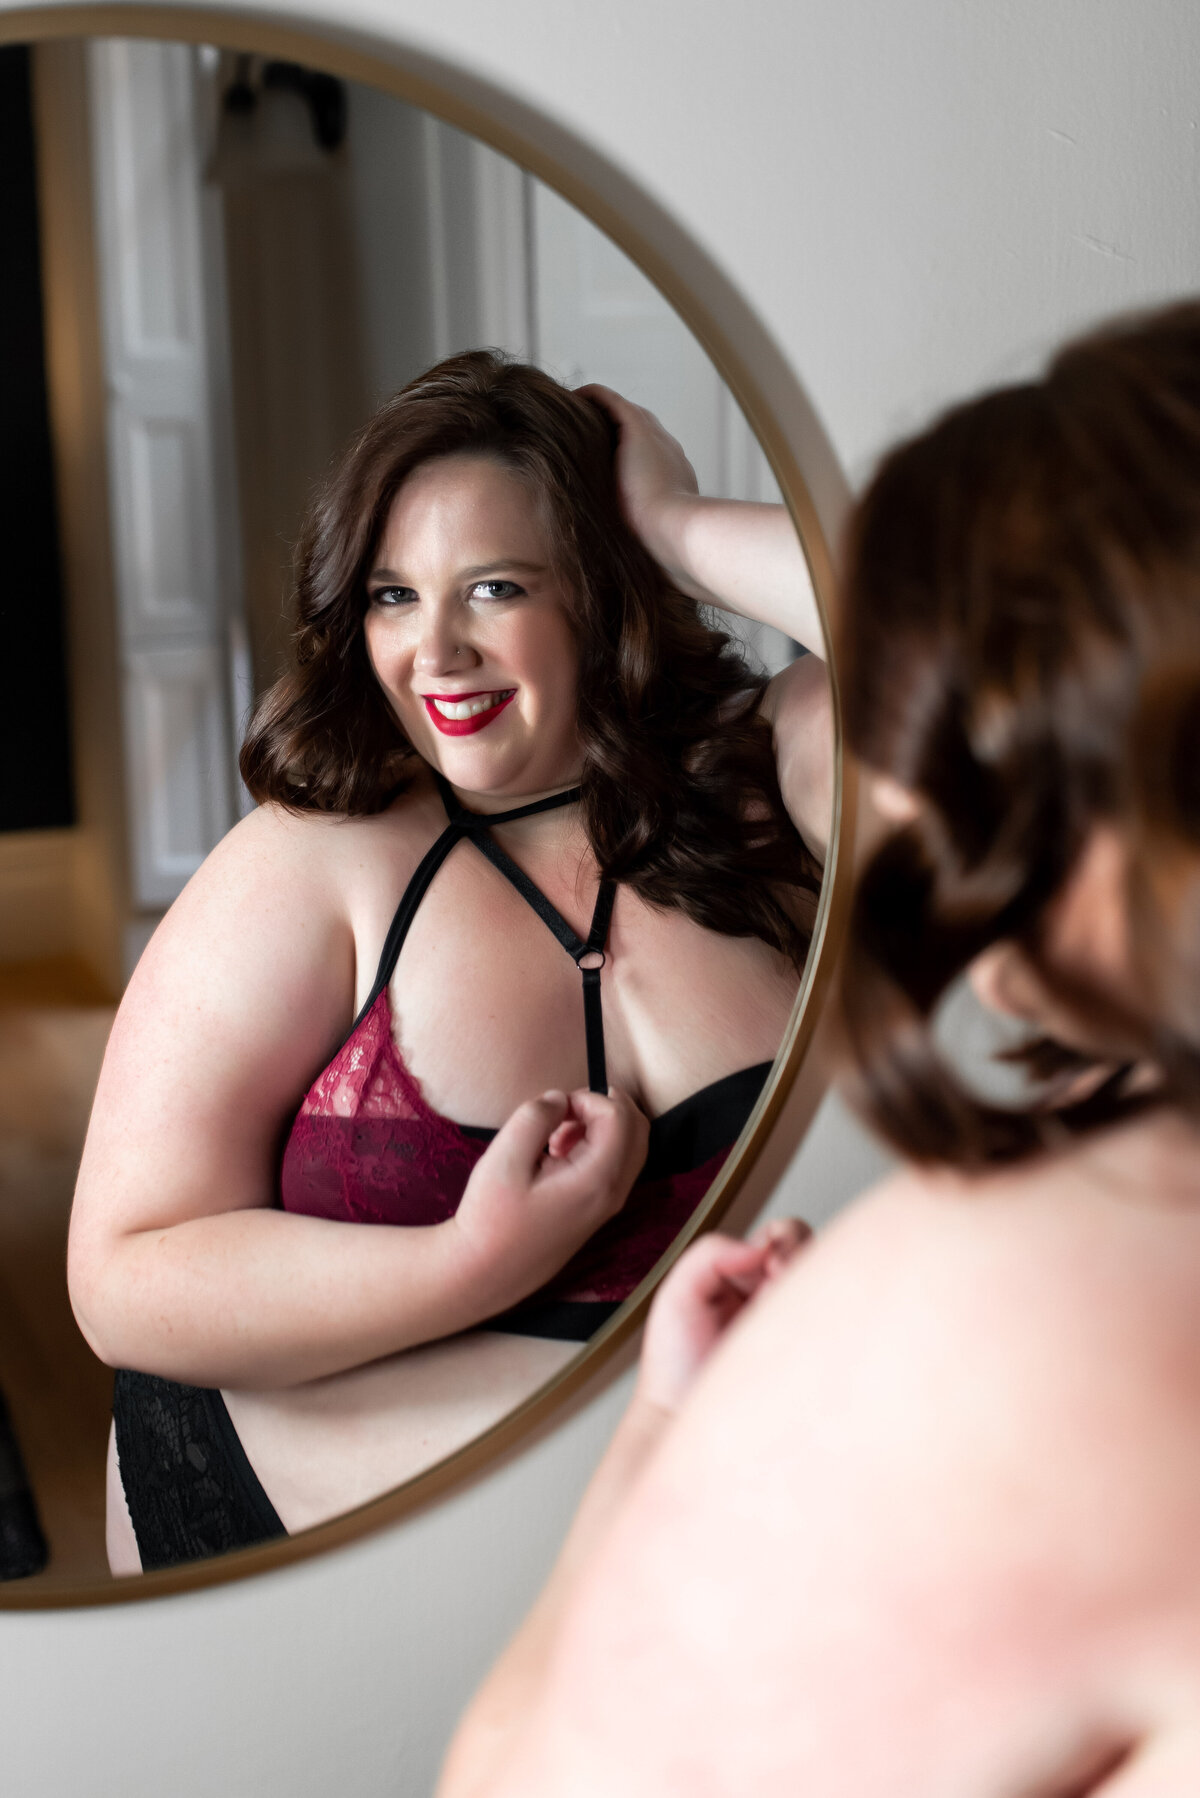 woman posed in a mirror wearing maroon lingerie